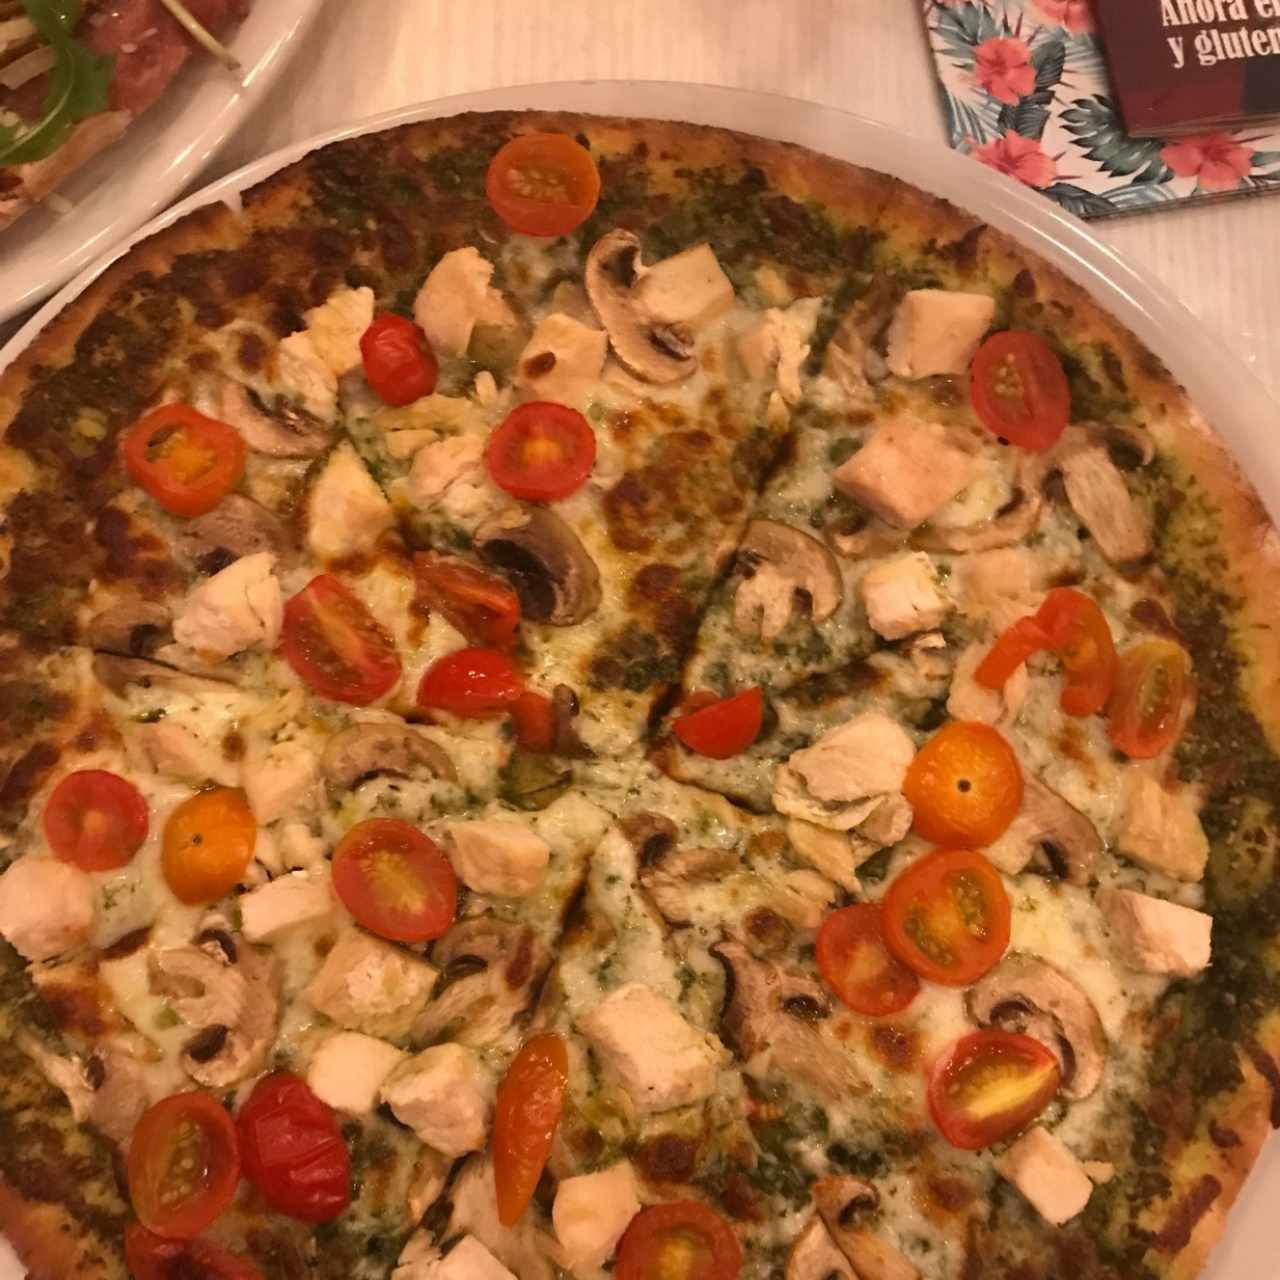 Pizza Nicoletta, de aroma suave, saludable y deliciosa